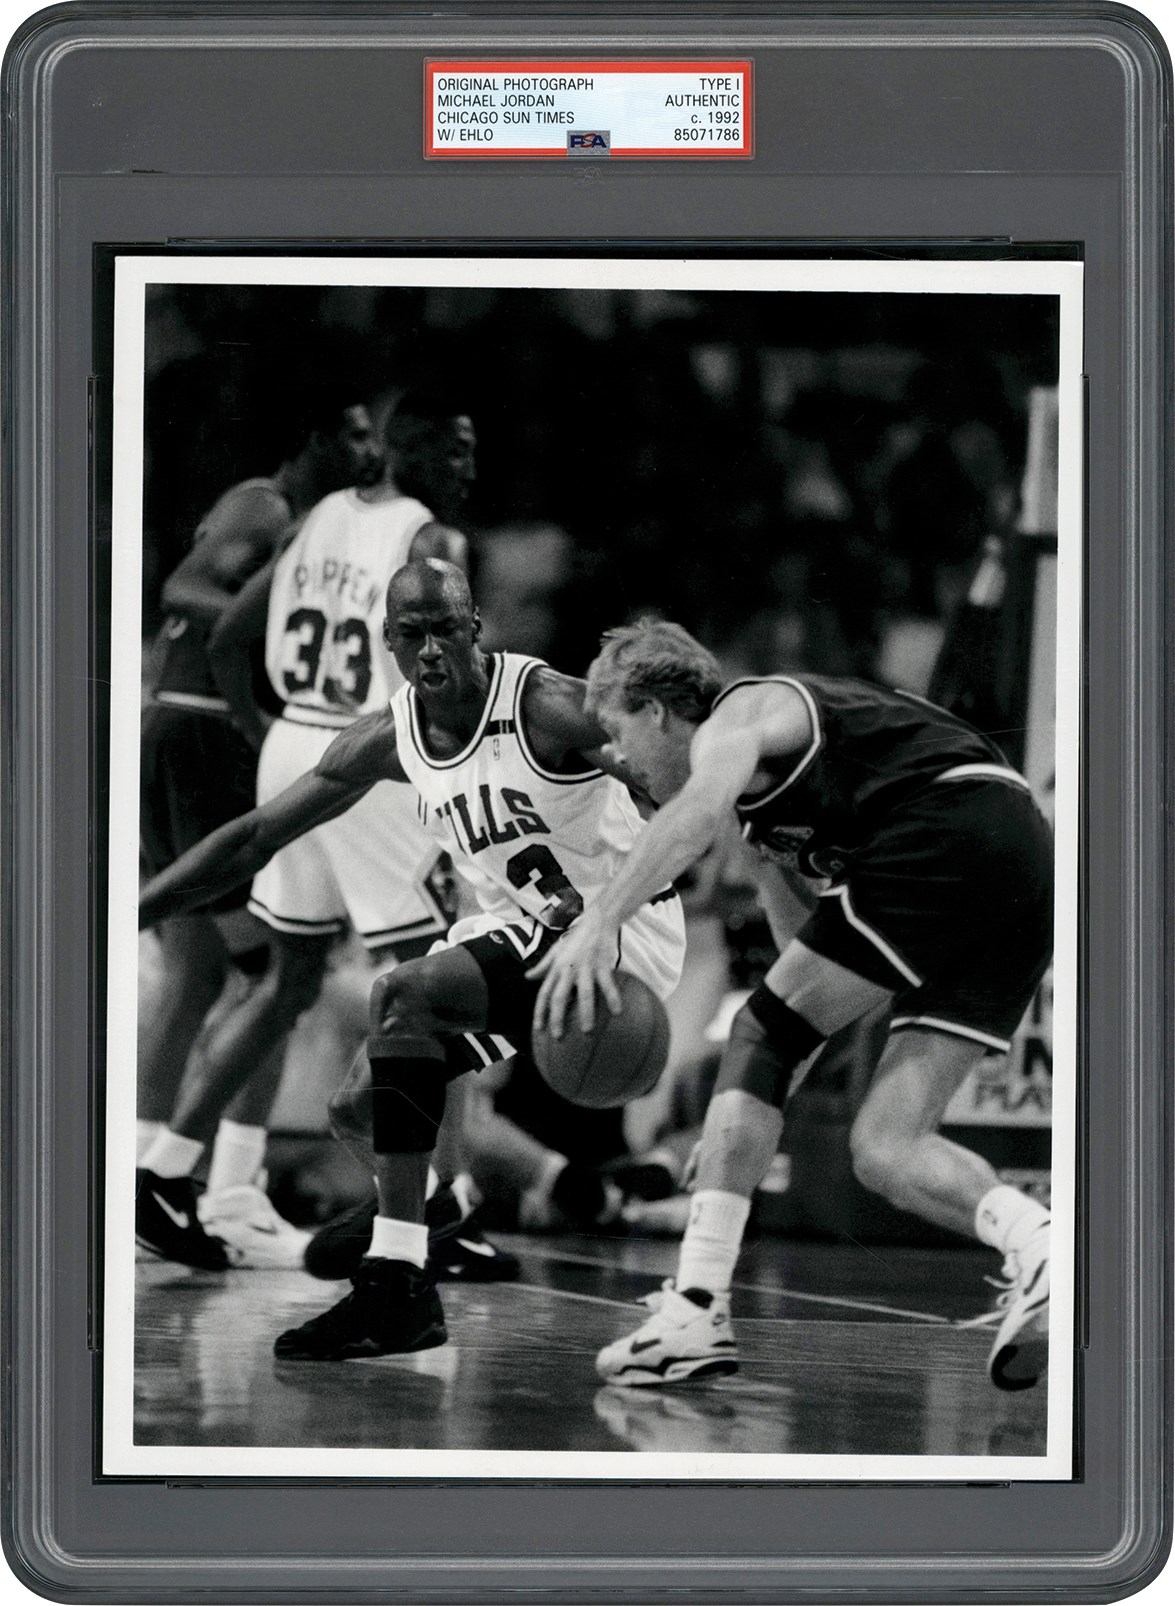 - 1992 Michael Jordan Eastern Conference Finals Original Chicago Sun Times Photograph (PSA Type I)